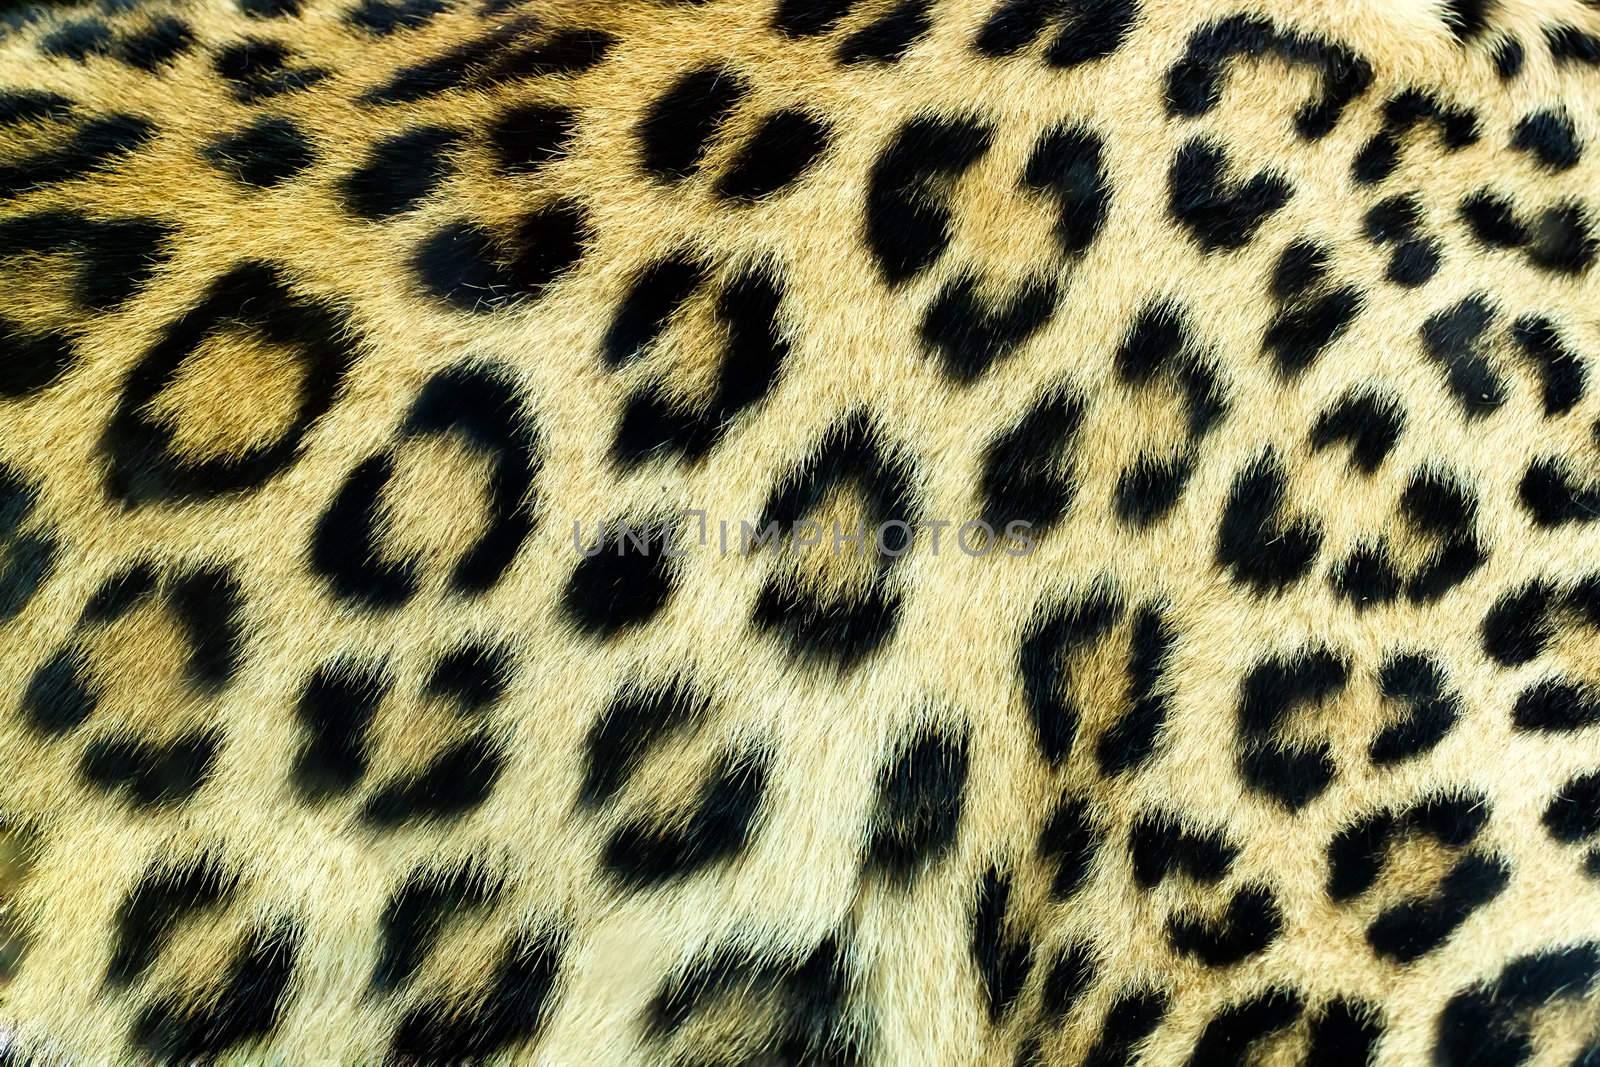  Snow Leopard Irbis (Panthera uncia) skin texture by artush